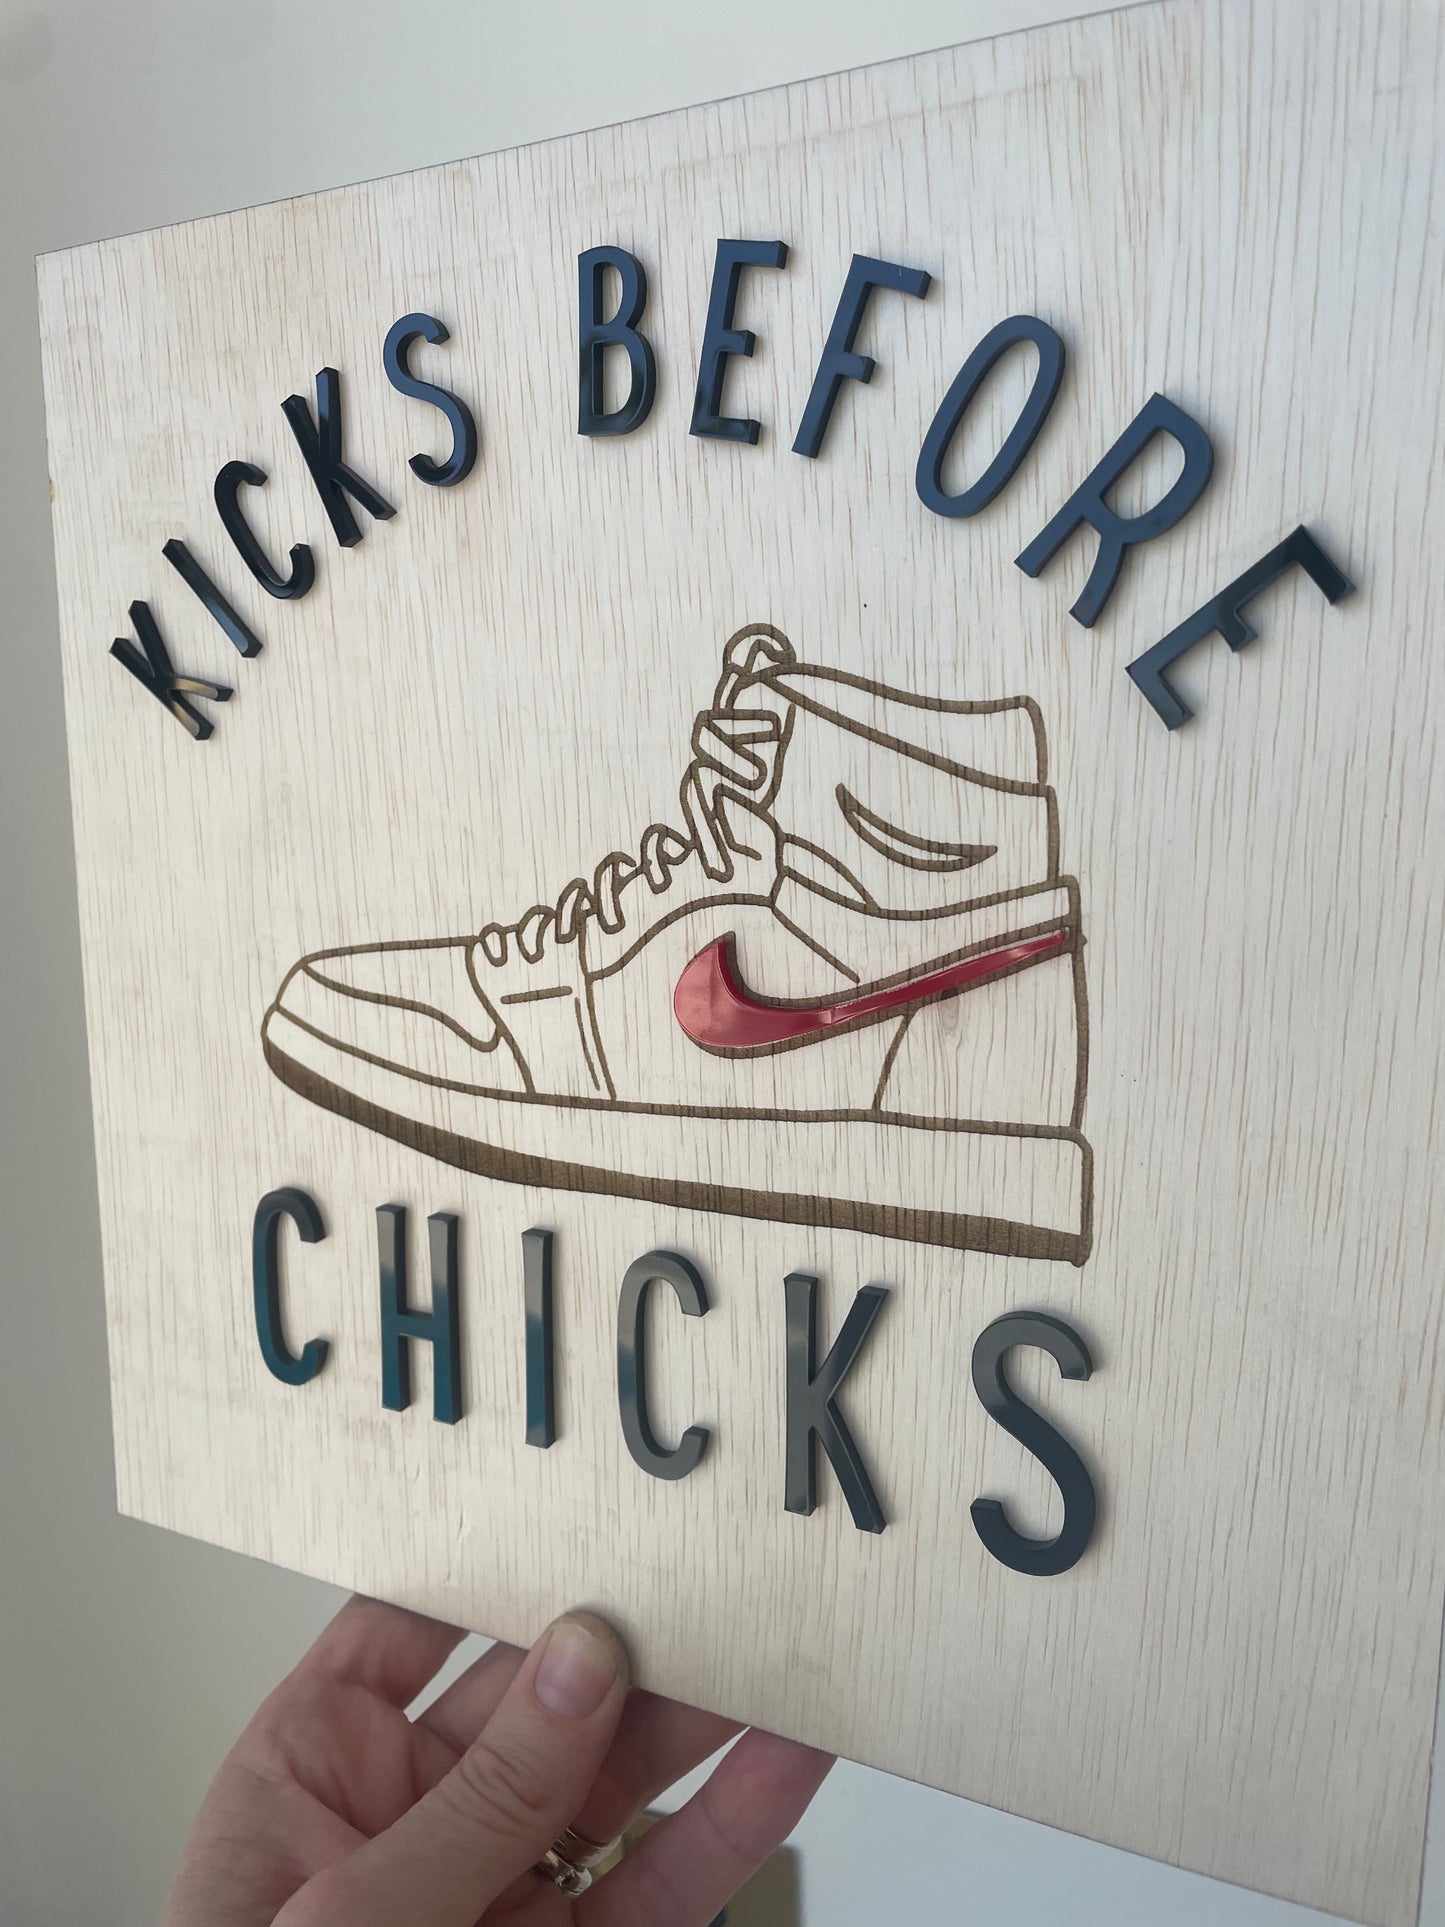 Kicks before Chicks